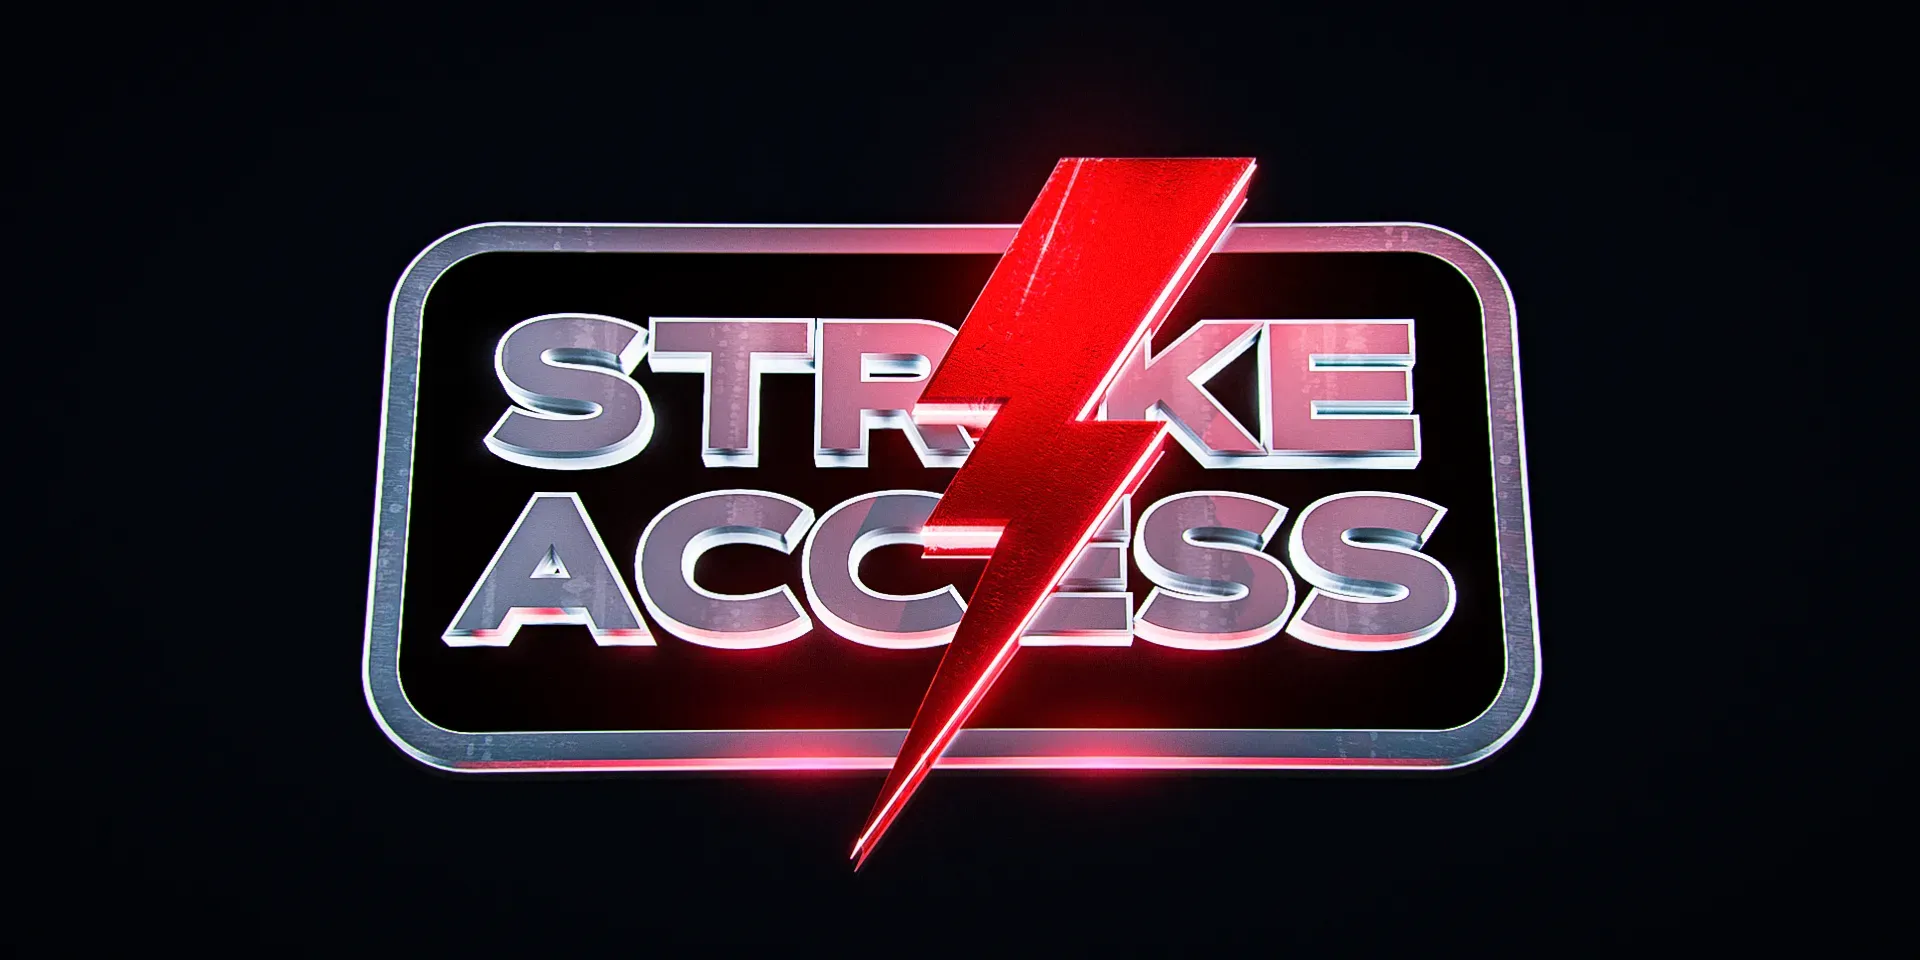 Strike Access